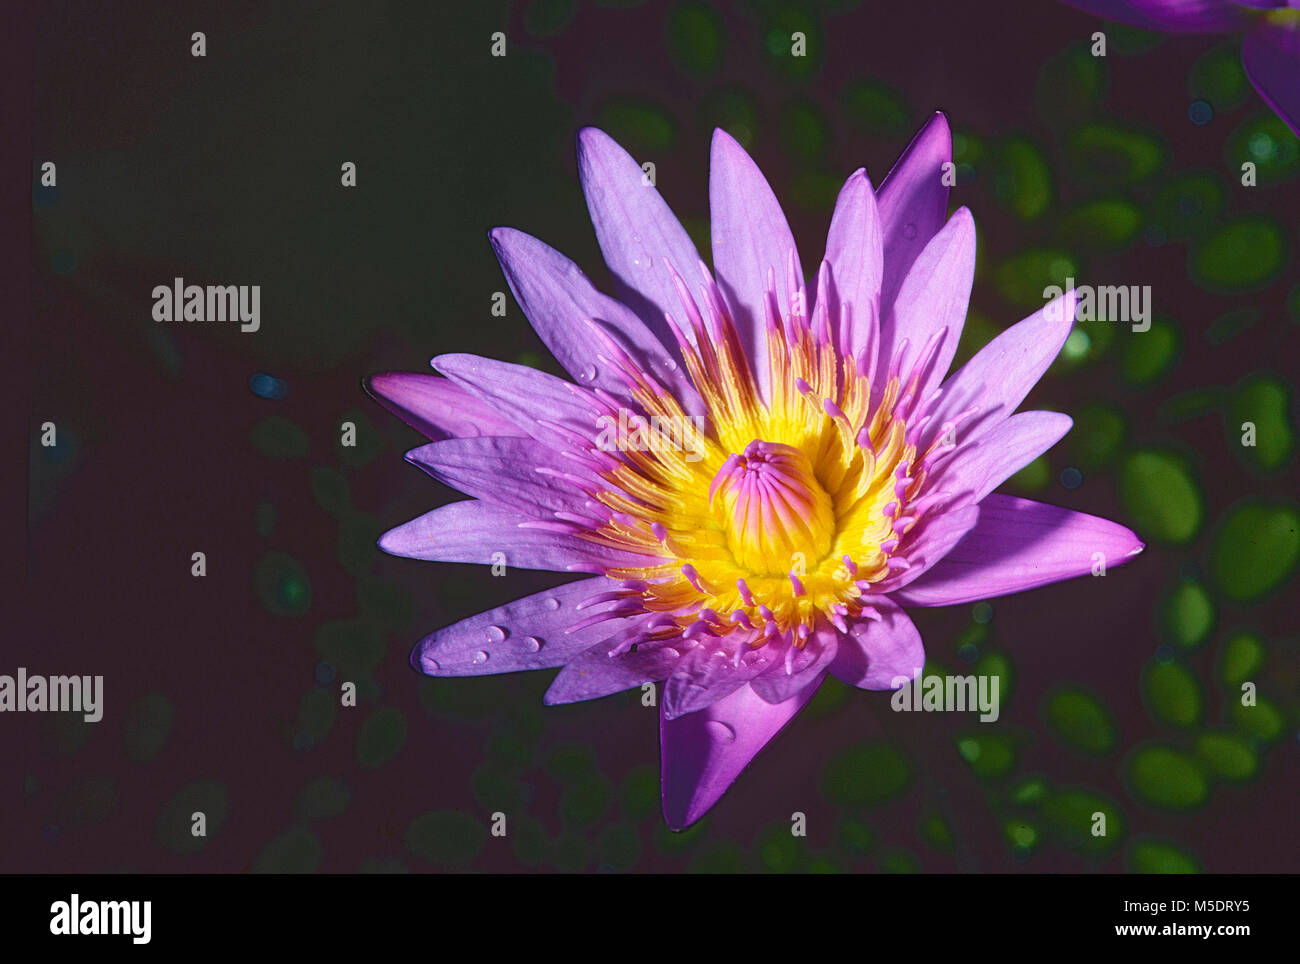 Star-lotus, ninfei nouchali, Nymphaceaceae, ninfee Blüte, blühend, Blume, Pflanze, Botanischer Garten, Singapore Foto Stock